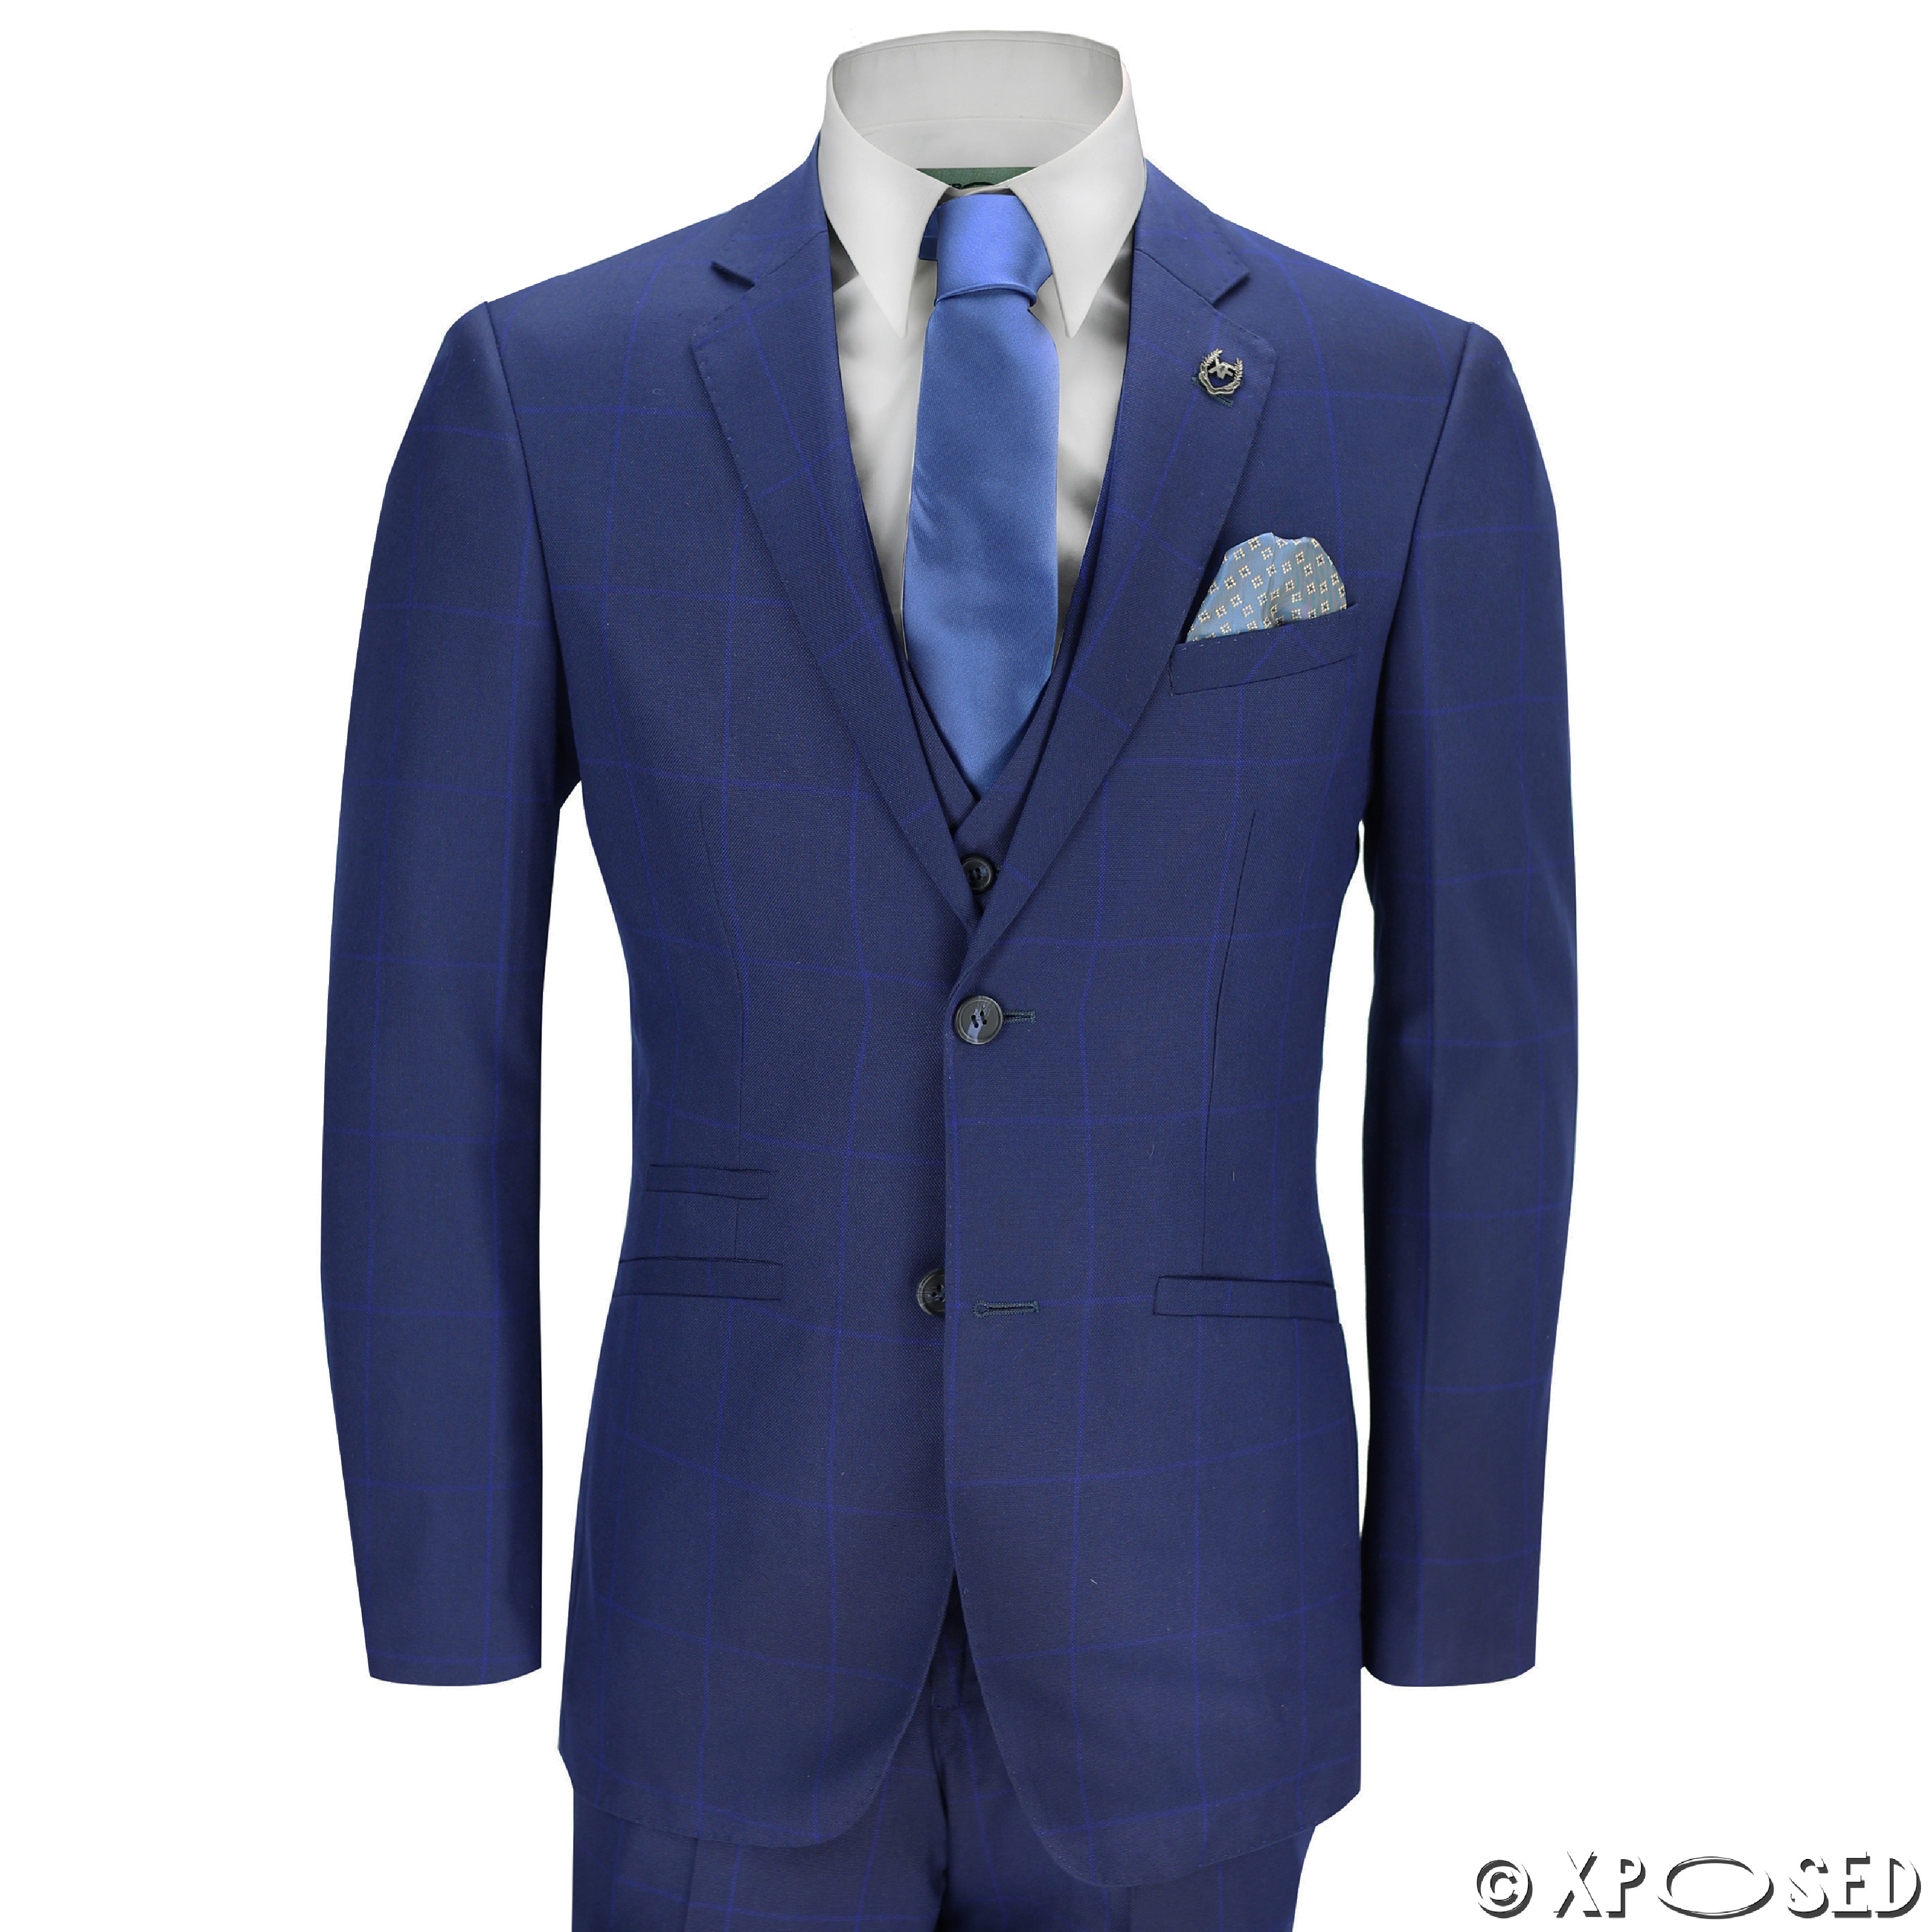 Mens 3 Piece Suit Blue Check on Navy Vintage Retro Smart Tailored Fit ...